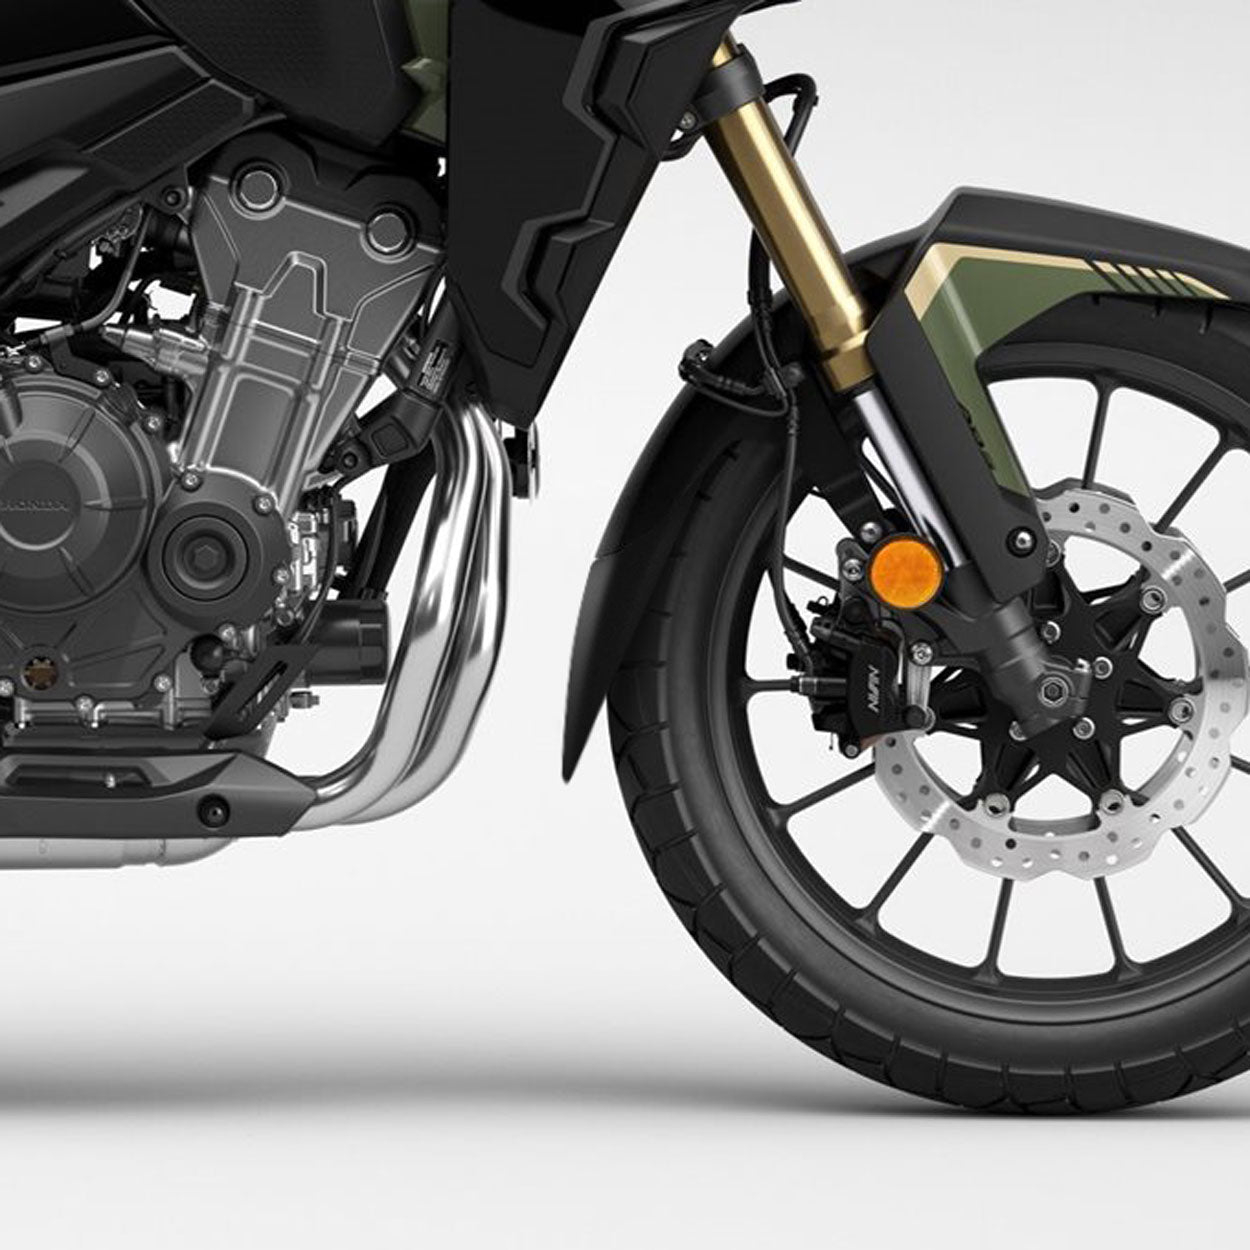 Honda Motorcycle Parts & Accessories